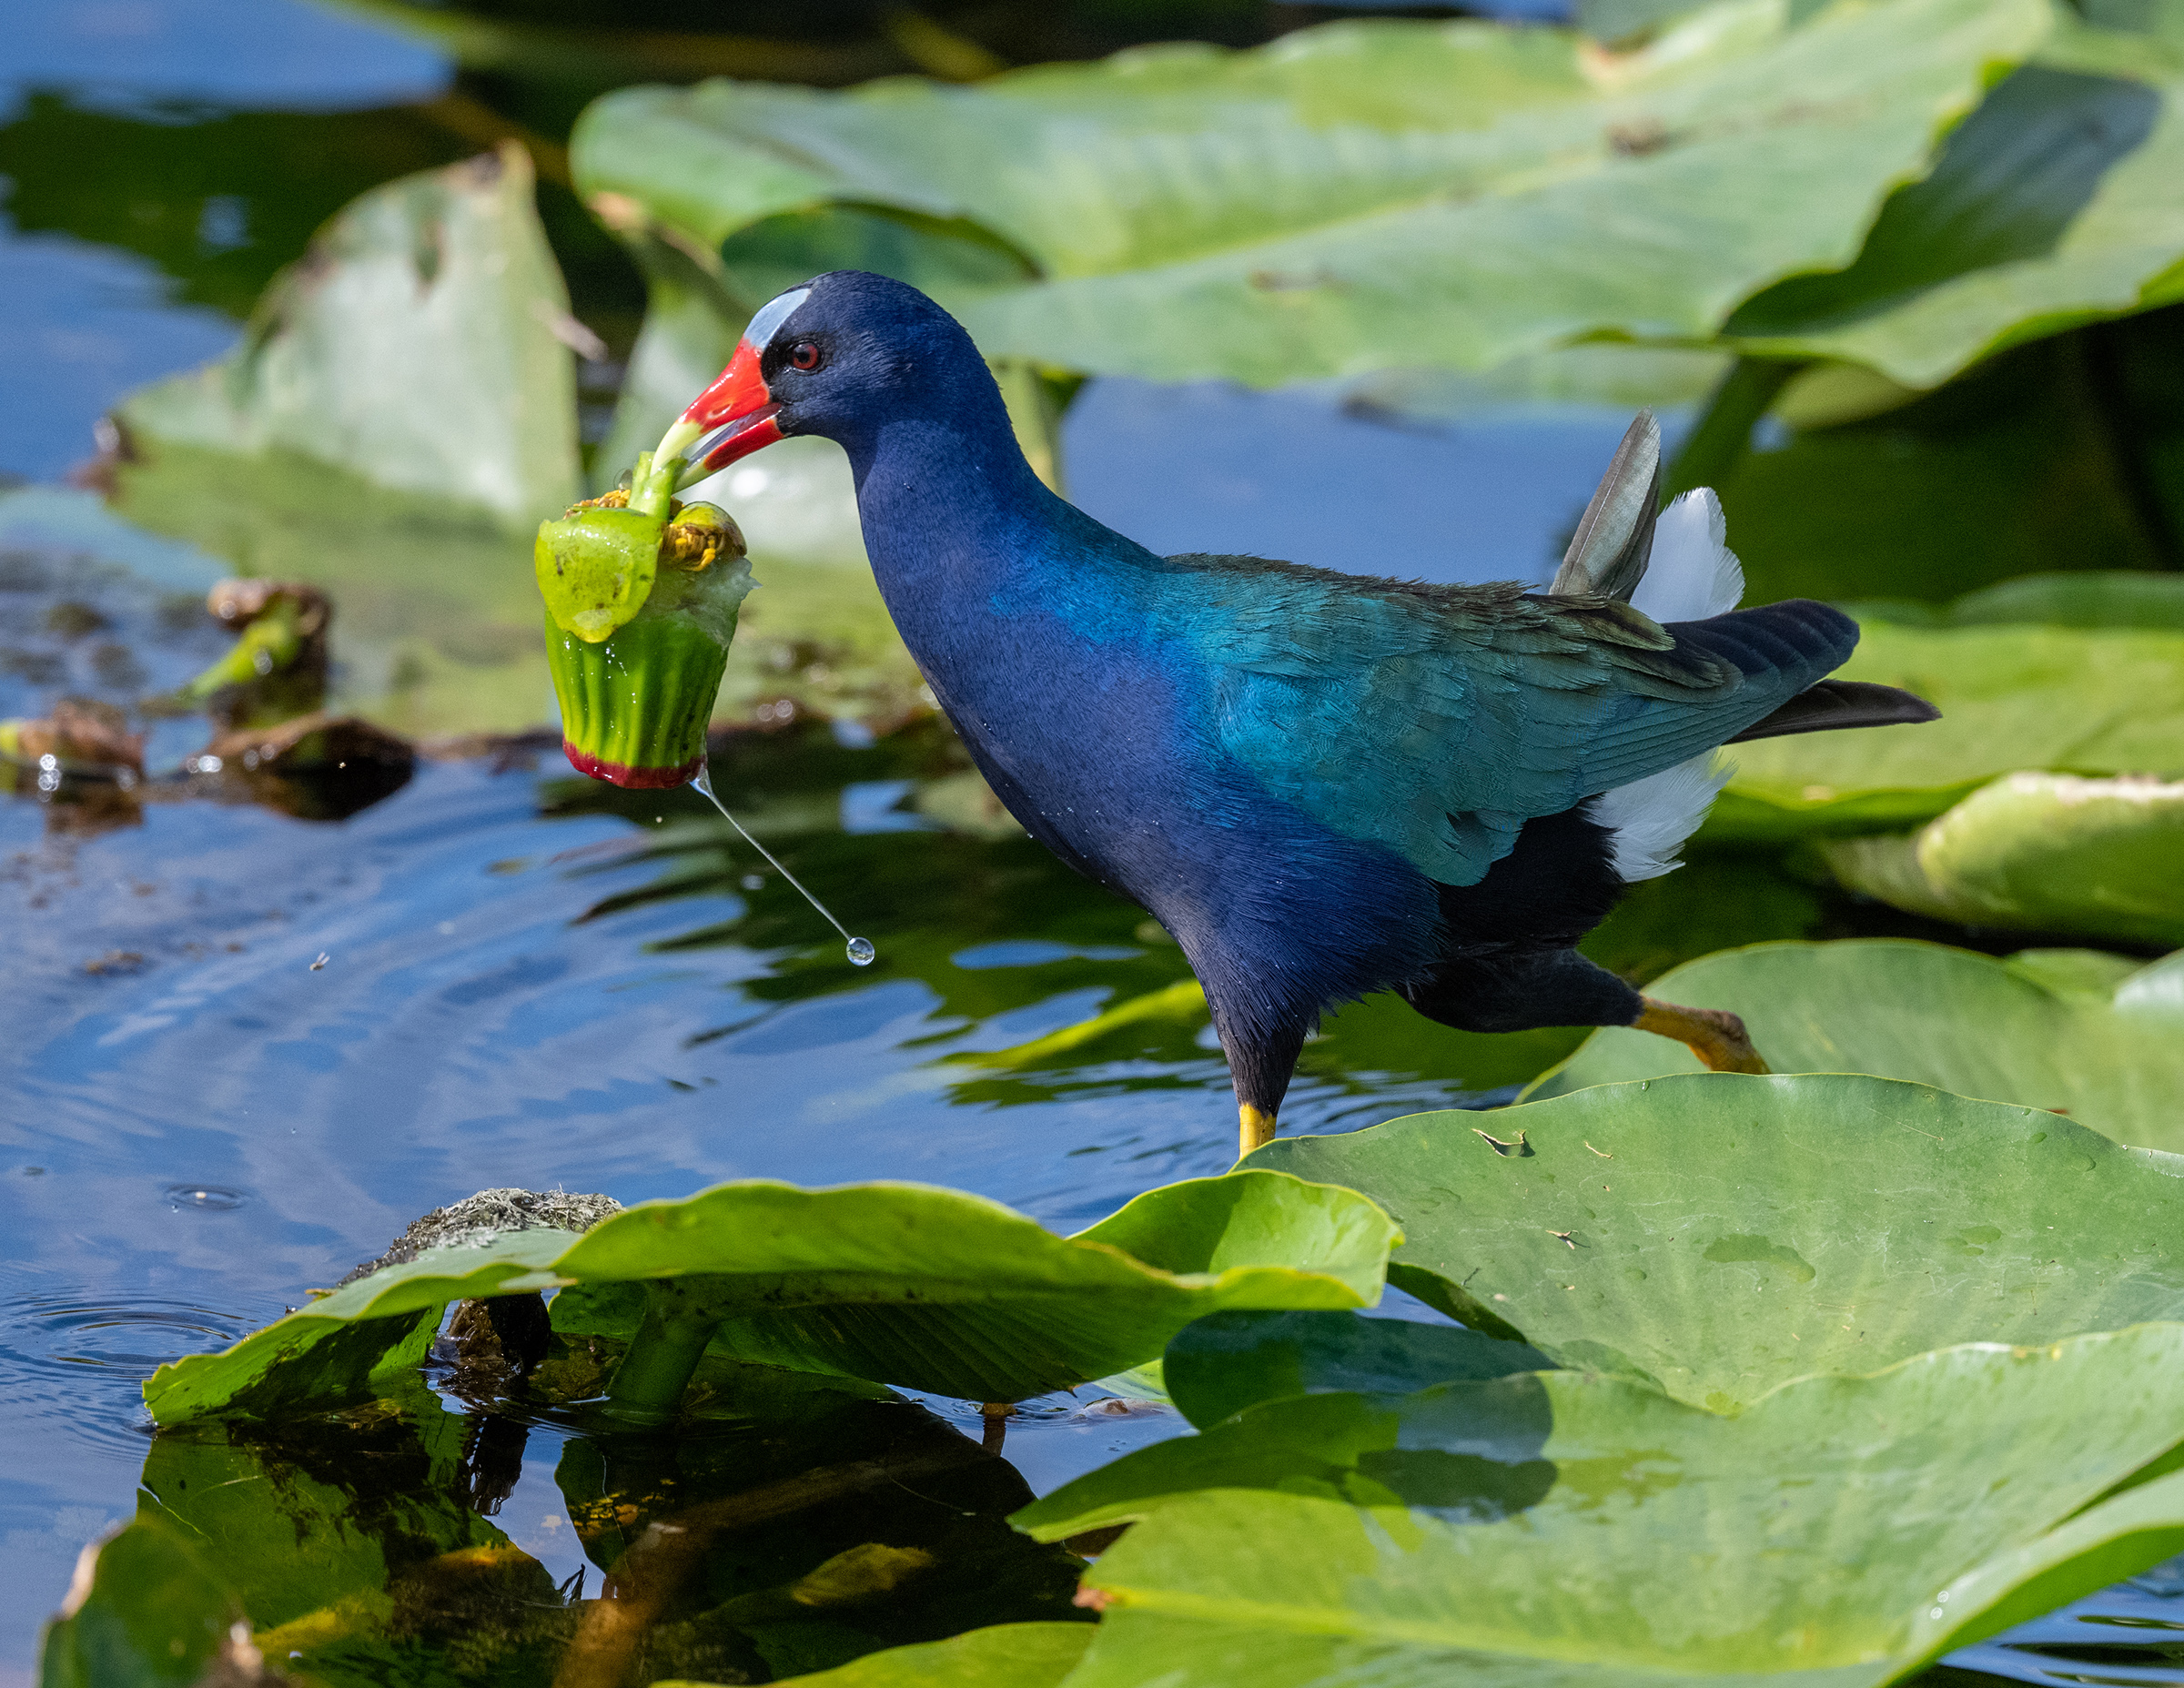 A brilliant blue bird walking on lilypads